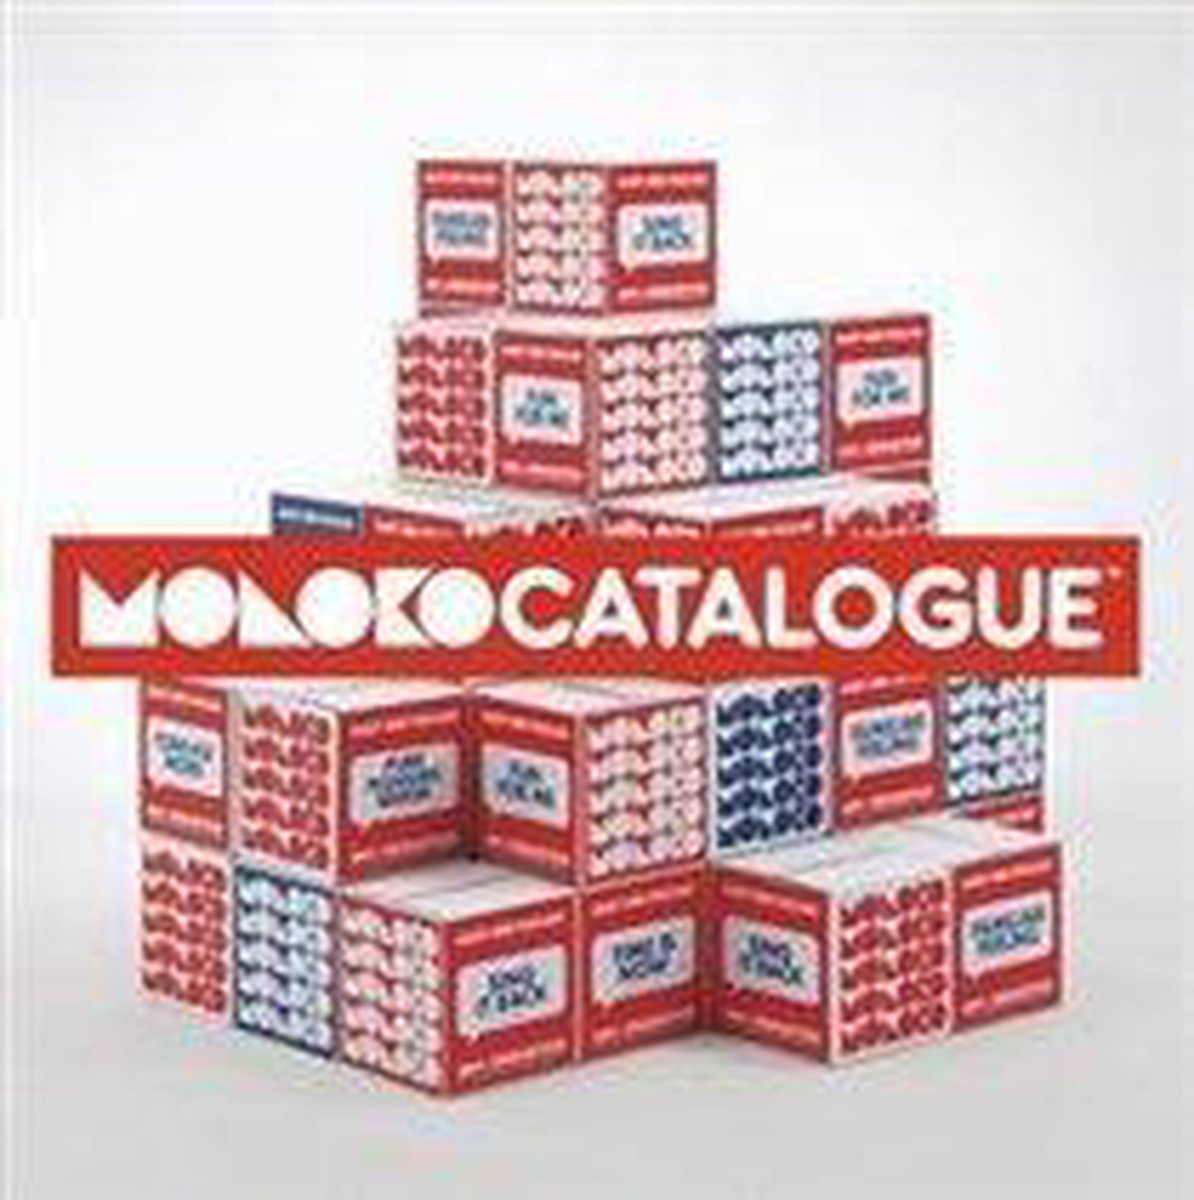 Moloko - Catalogue - Moloko